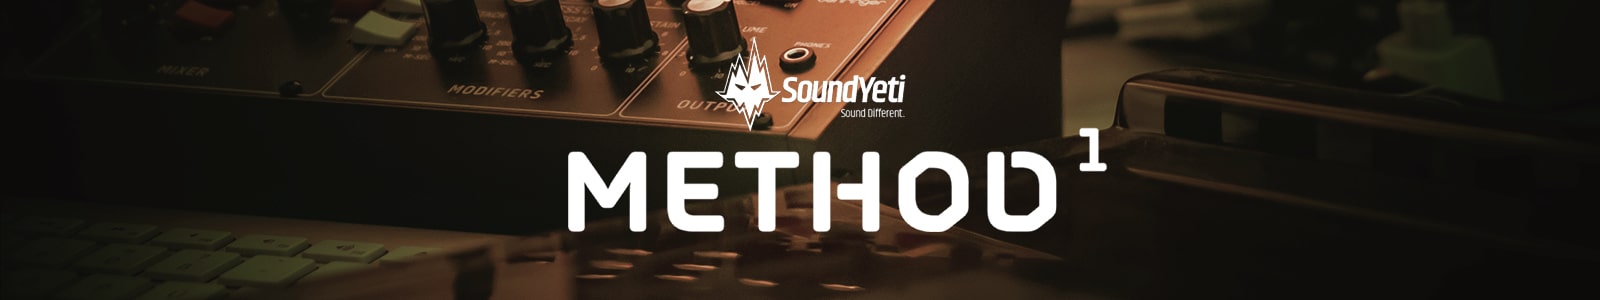 Method 1 by SoundYeti